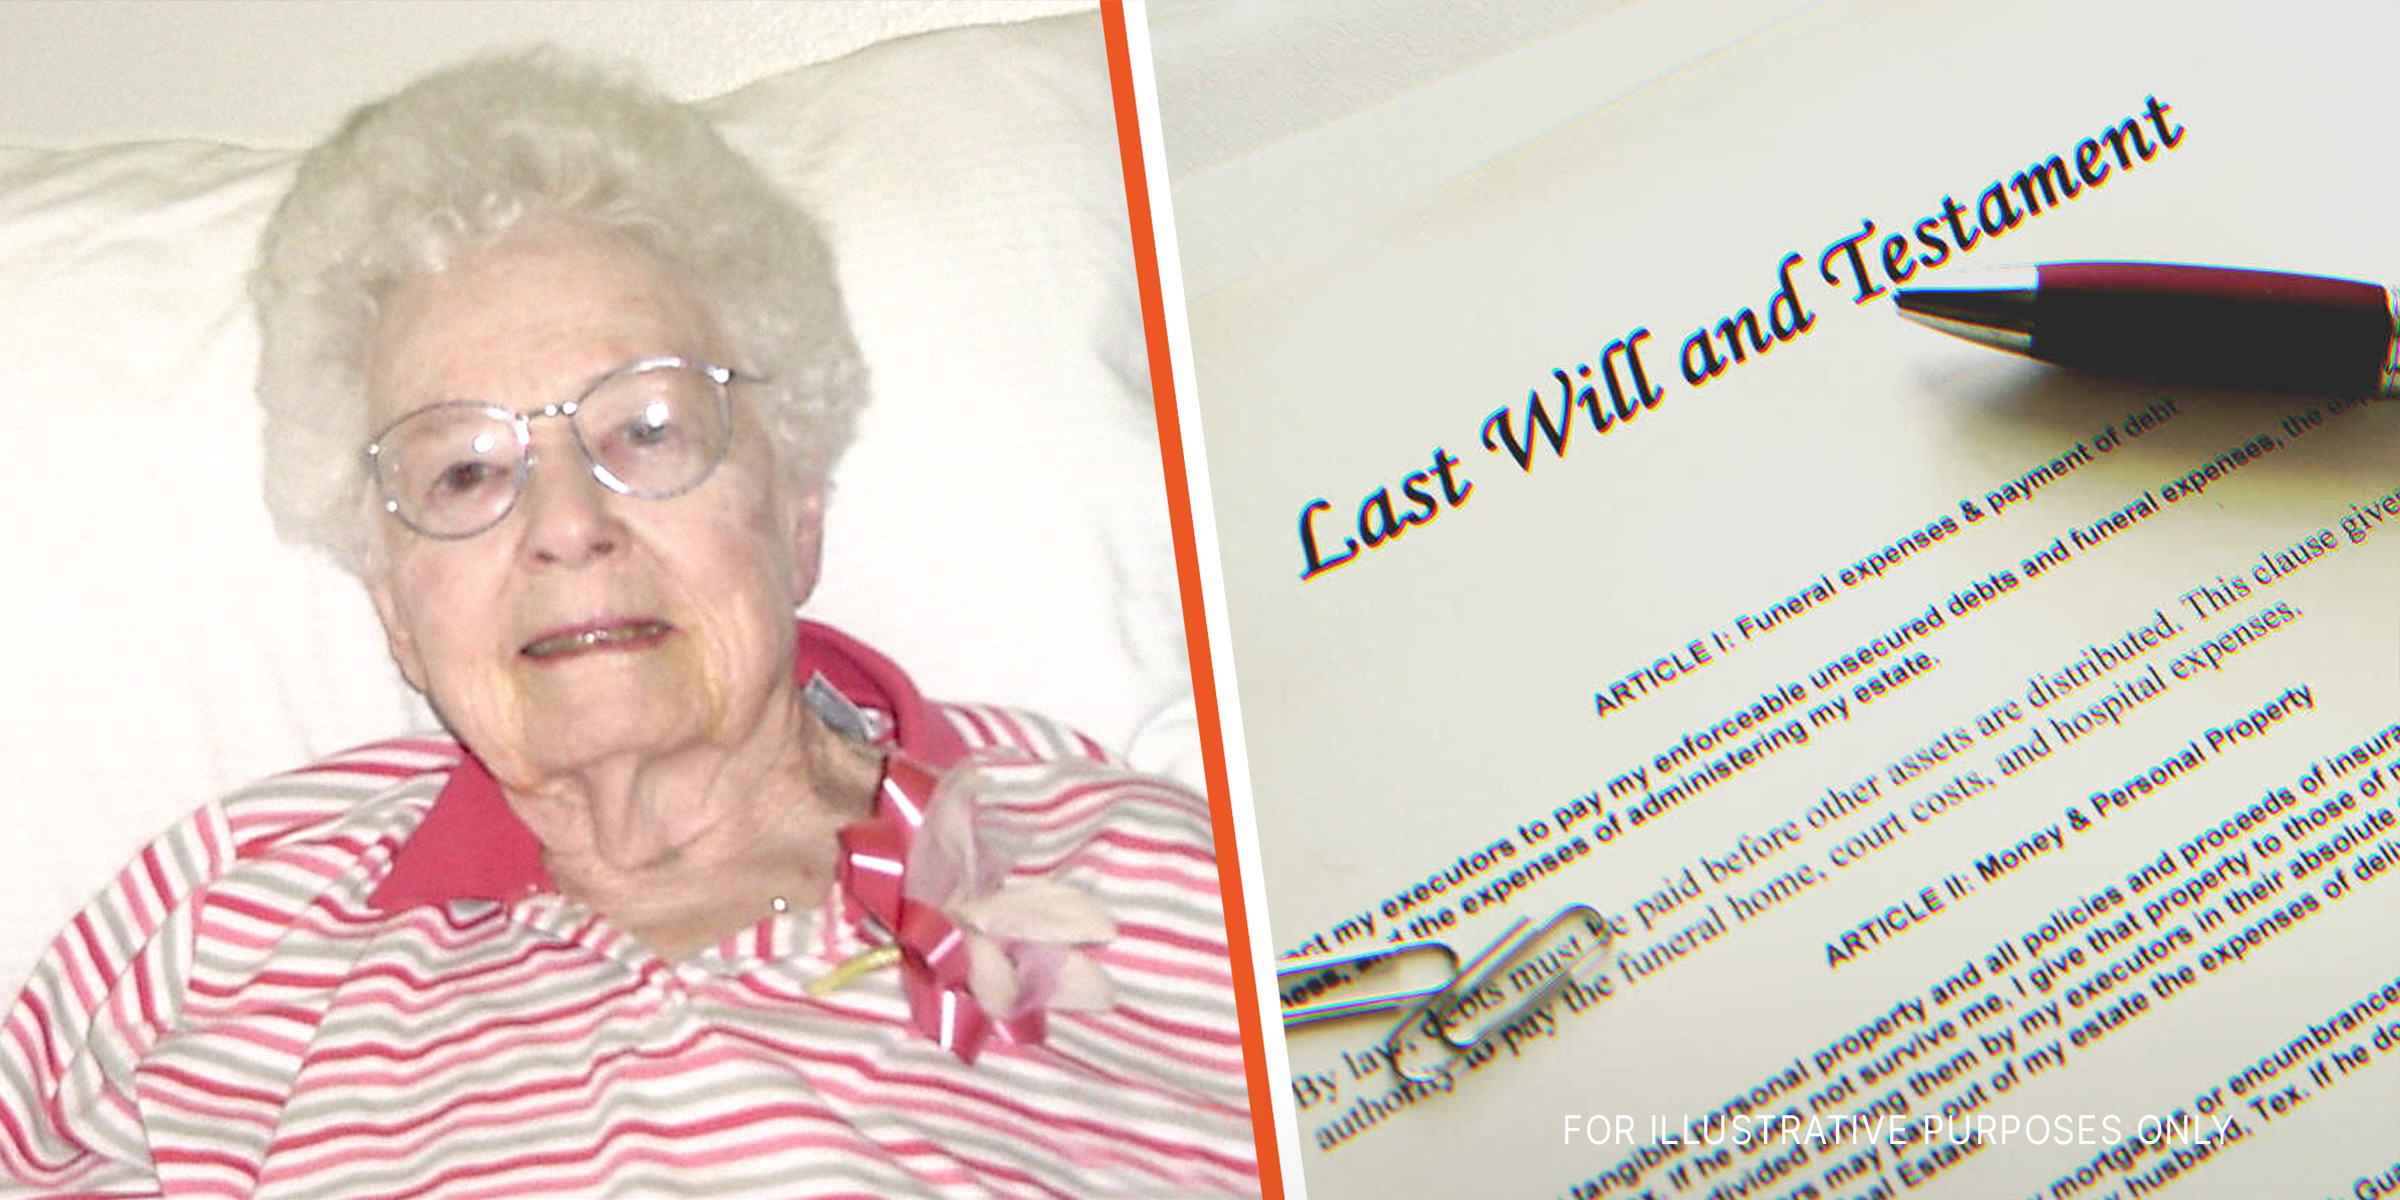 An elderly woman | A will and testament document | Source: Shutterstock